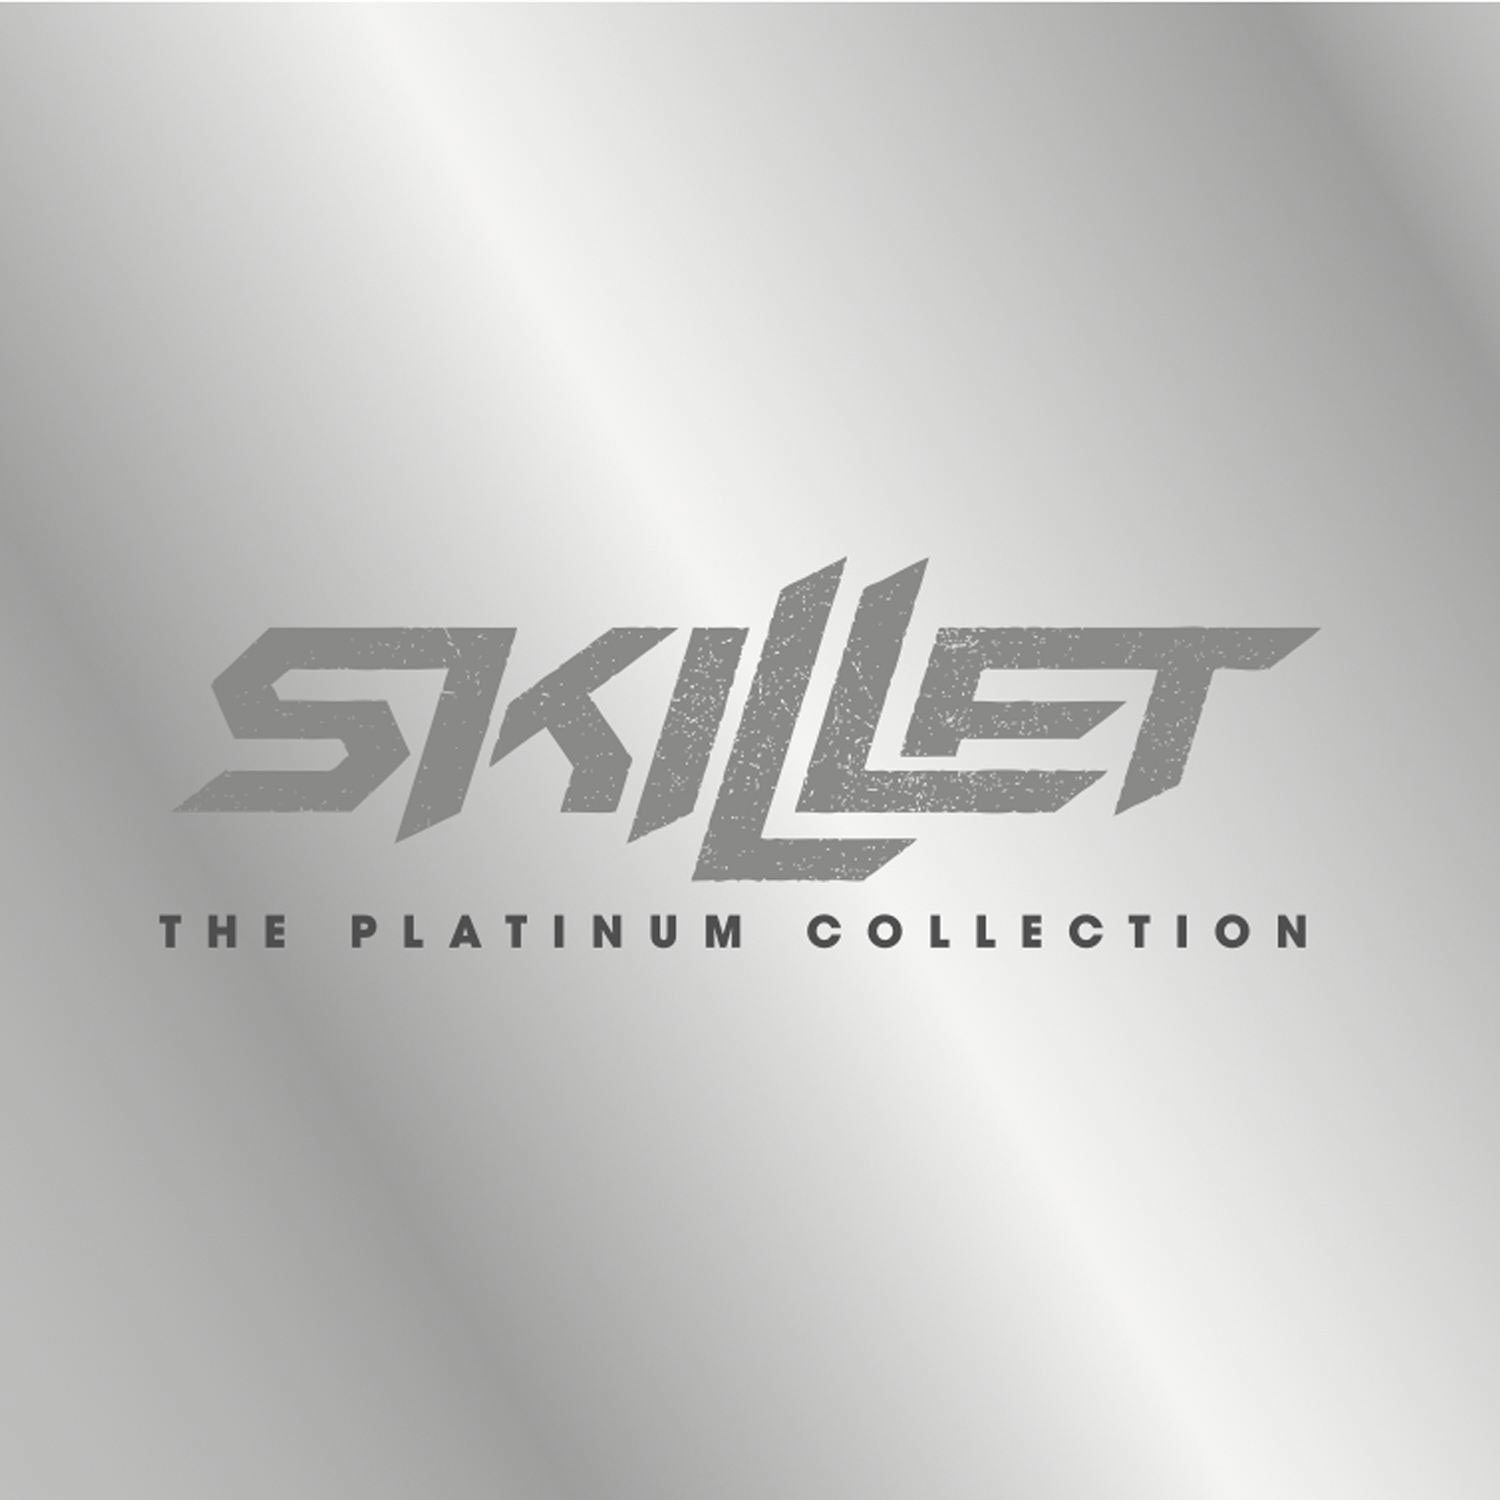 Skillet альбомы. Обложка группы Скиллет. Группа Skillet альбомы. Группа Skillet обложки альбомов. Skillet Comatose обложка альбома.